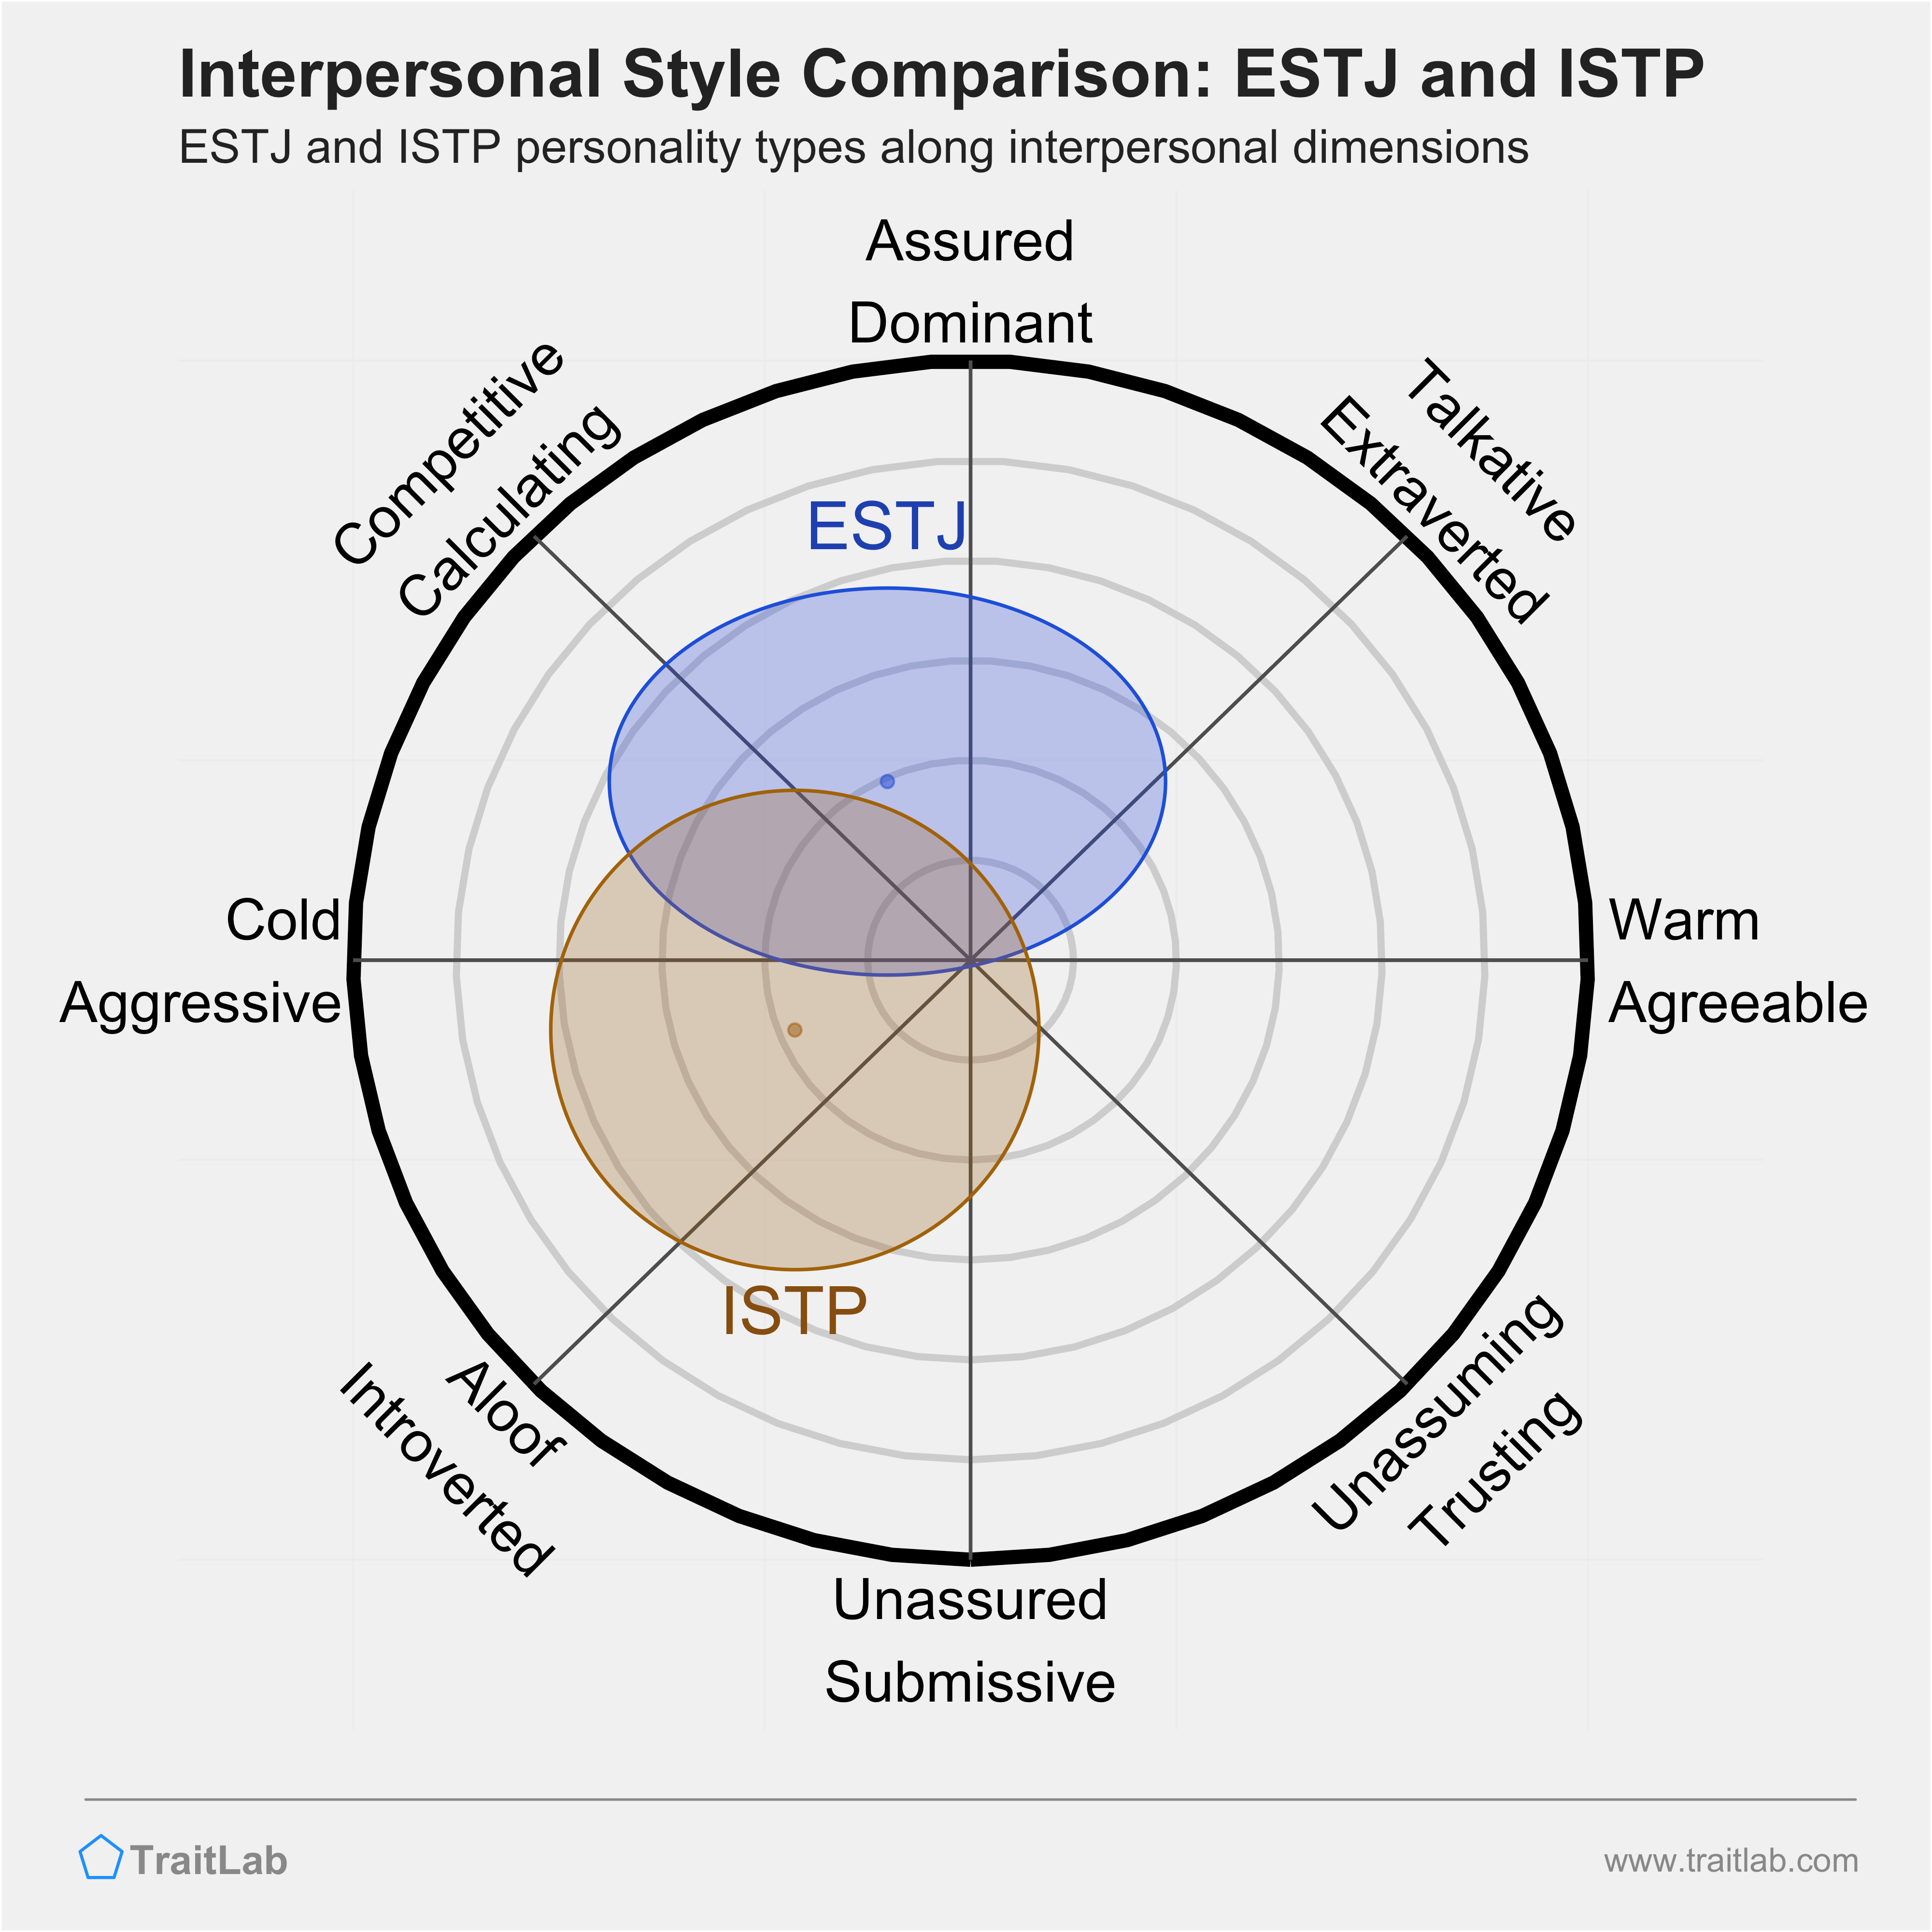 ESTJ and ISTP comparison across interpersonal dimensions